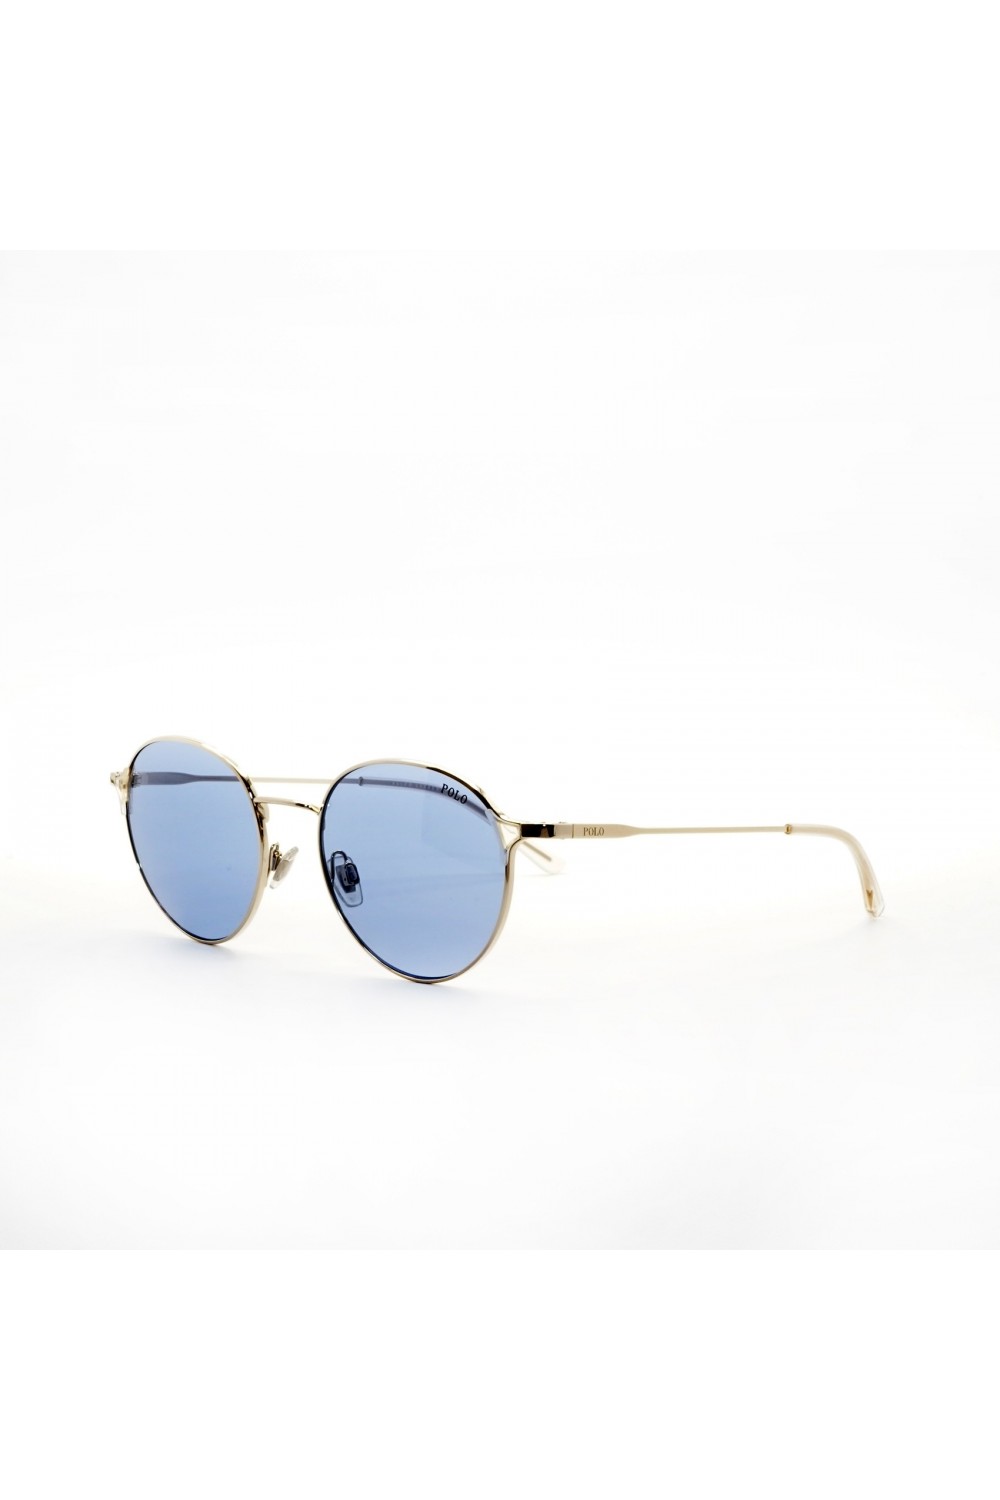 Ralph Lauren - Occhiali da sole in metallo tondi unisex oro - PH3109 9116/72